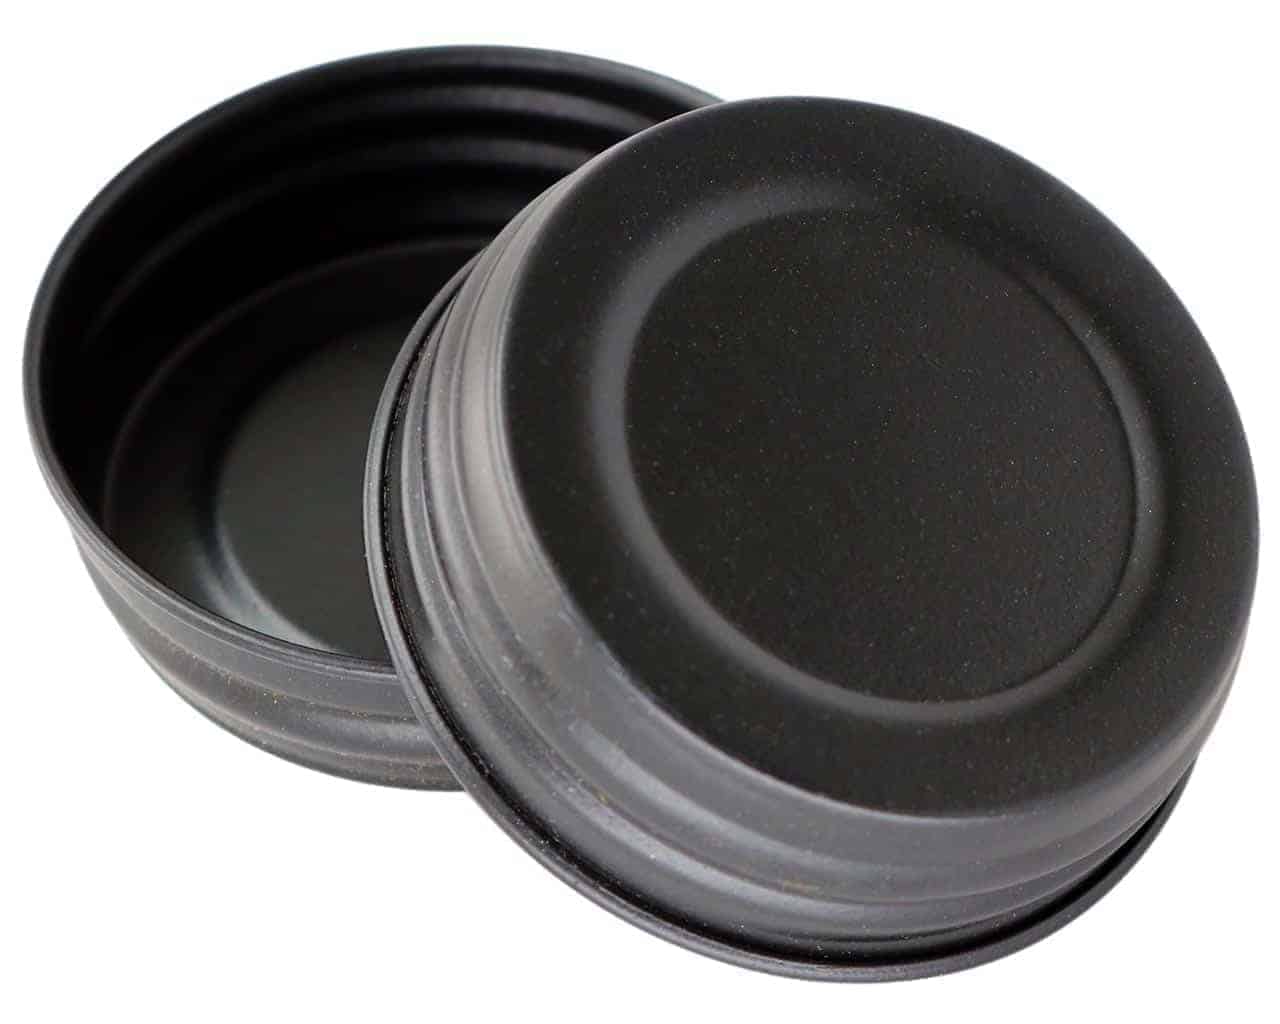 Black Vintage Reproduction Mason Jar Lids 4 Pack